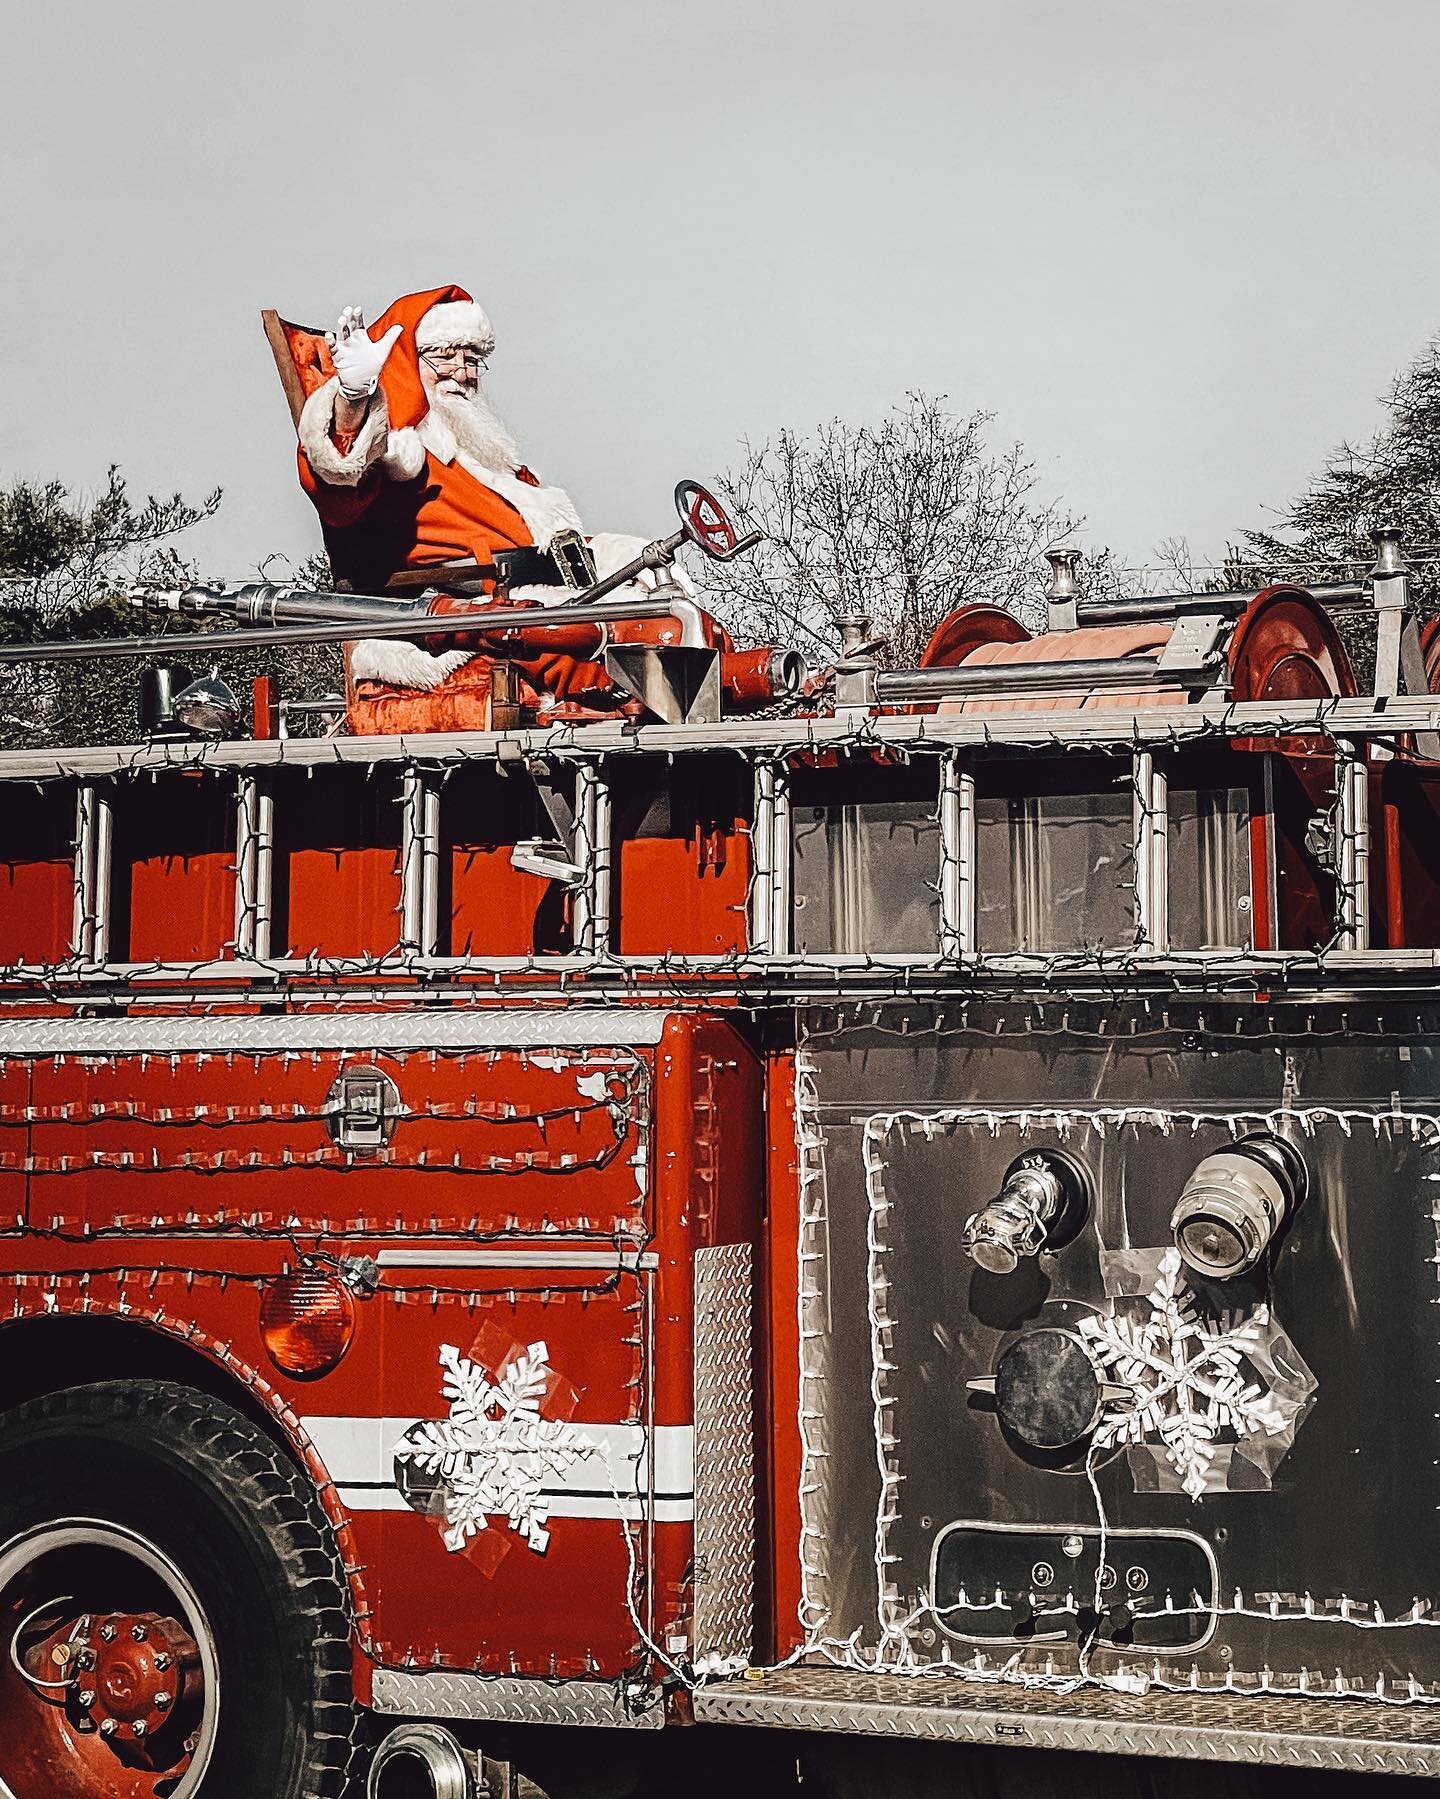 🚒🎅🏻Santa&rsquo;s🎅🏻🚒 
.
.
.
.
.
#santa #christmas #holidays #firetrucksanta #tistheseason #santaclaus #december #instagood #instagram #instamood #happyholidays #christmasspirit #christmascountdown #holiday #festive #christmaslights